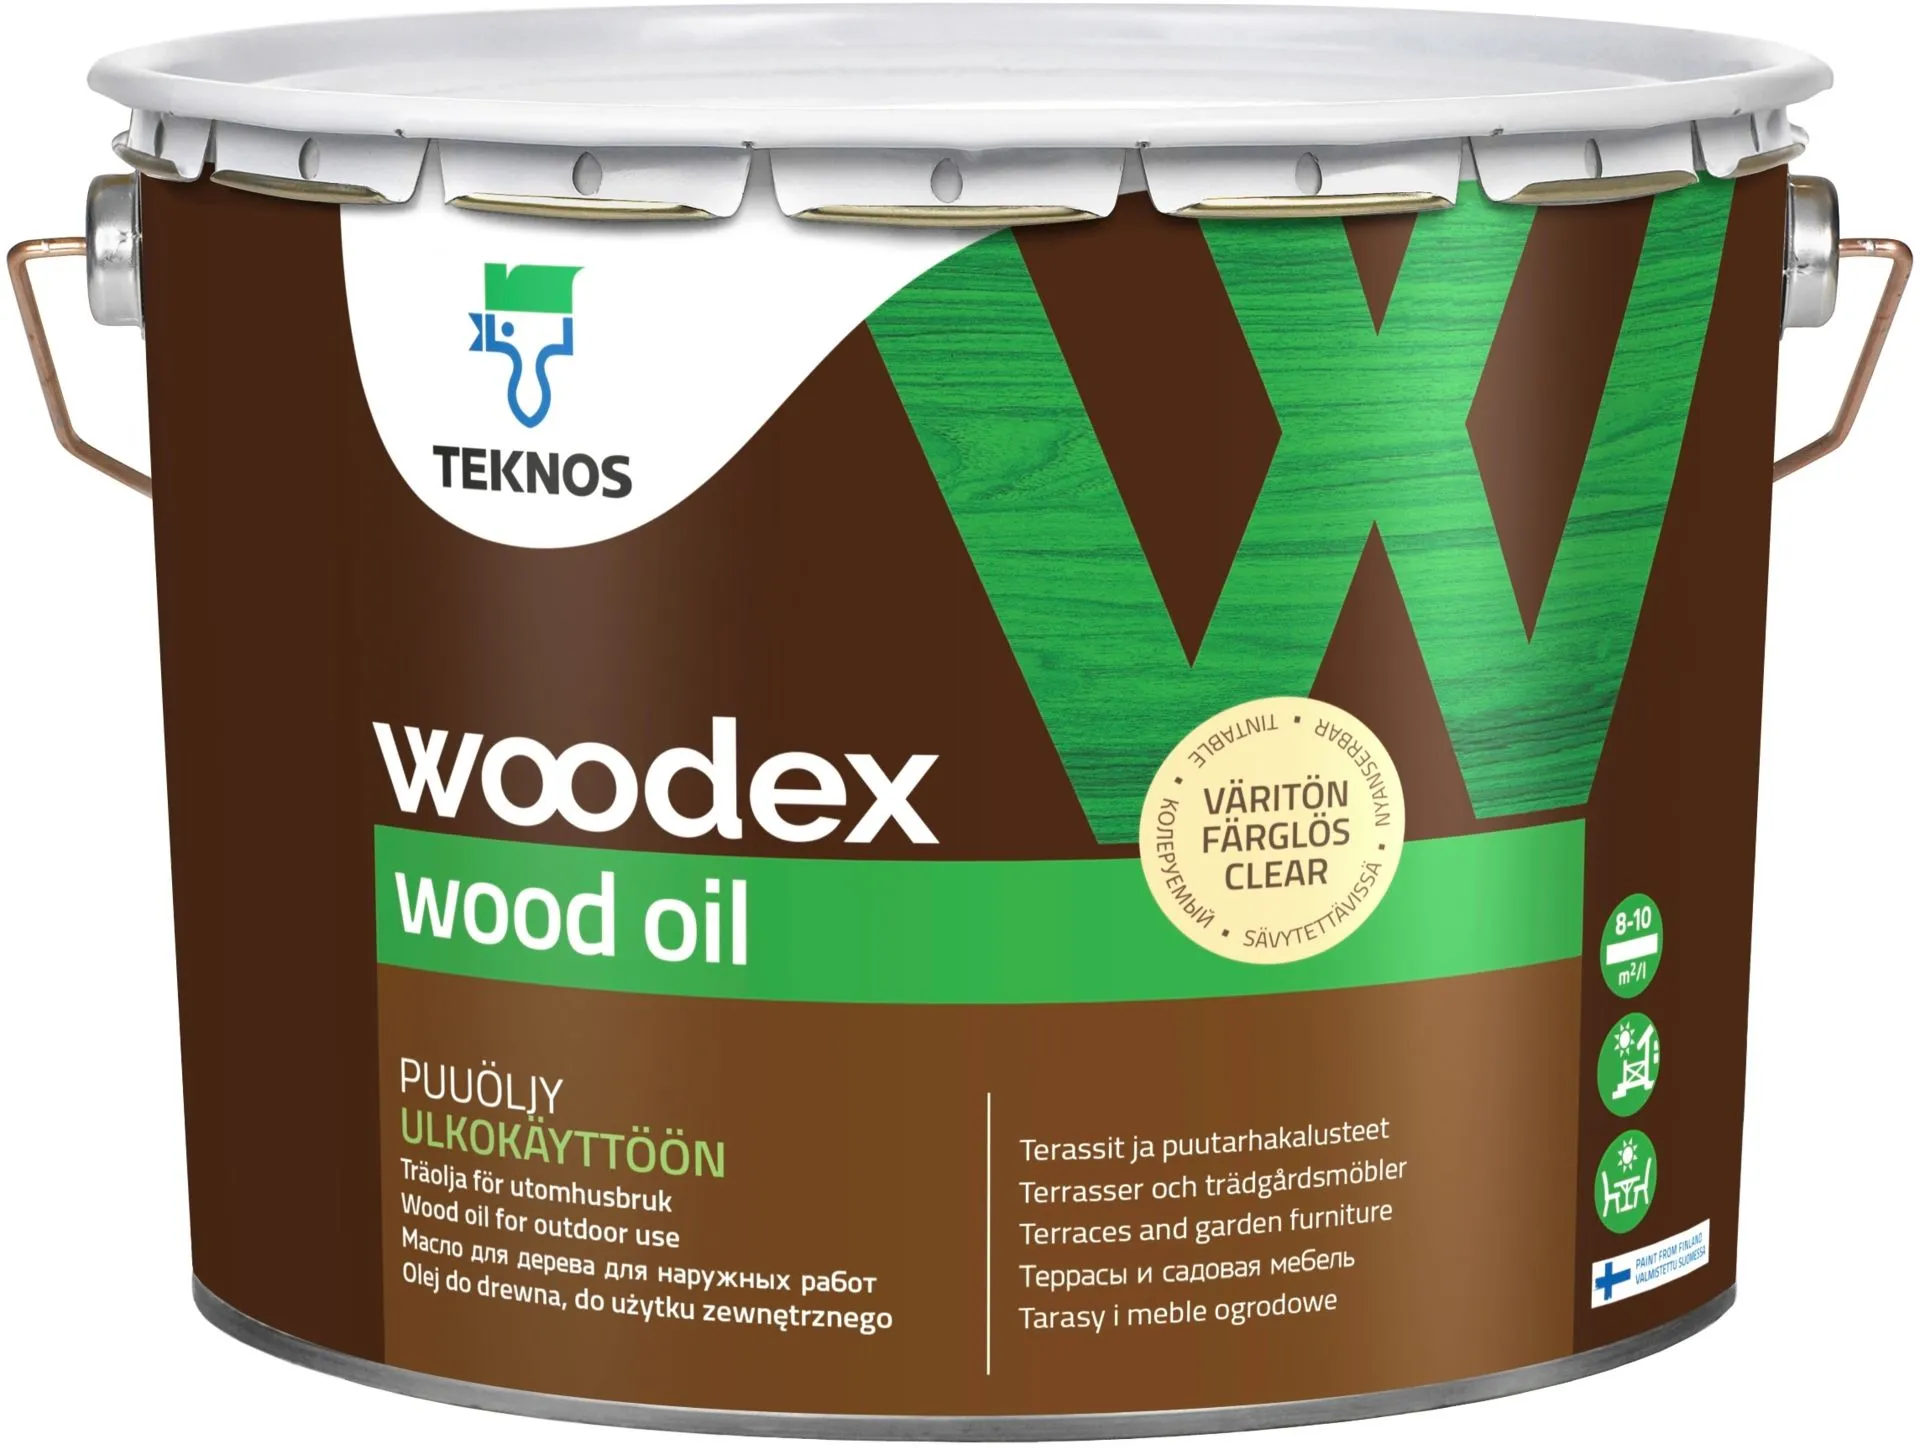 Teknos puuöljy Woodex Wood Oil  9 l väritön